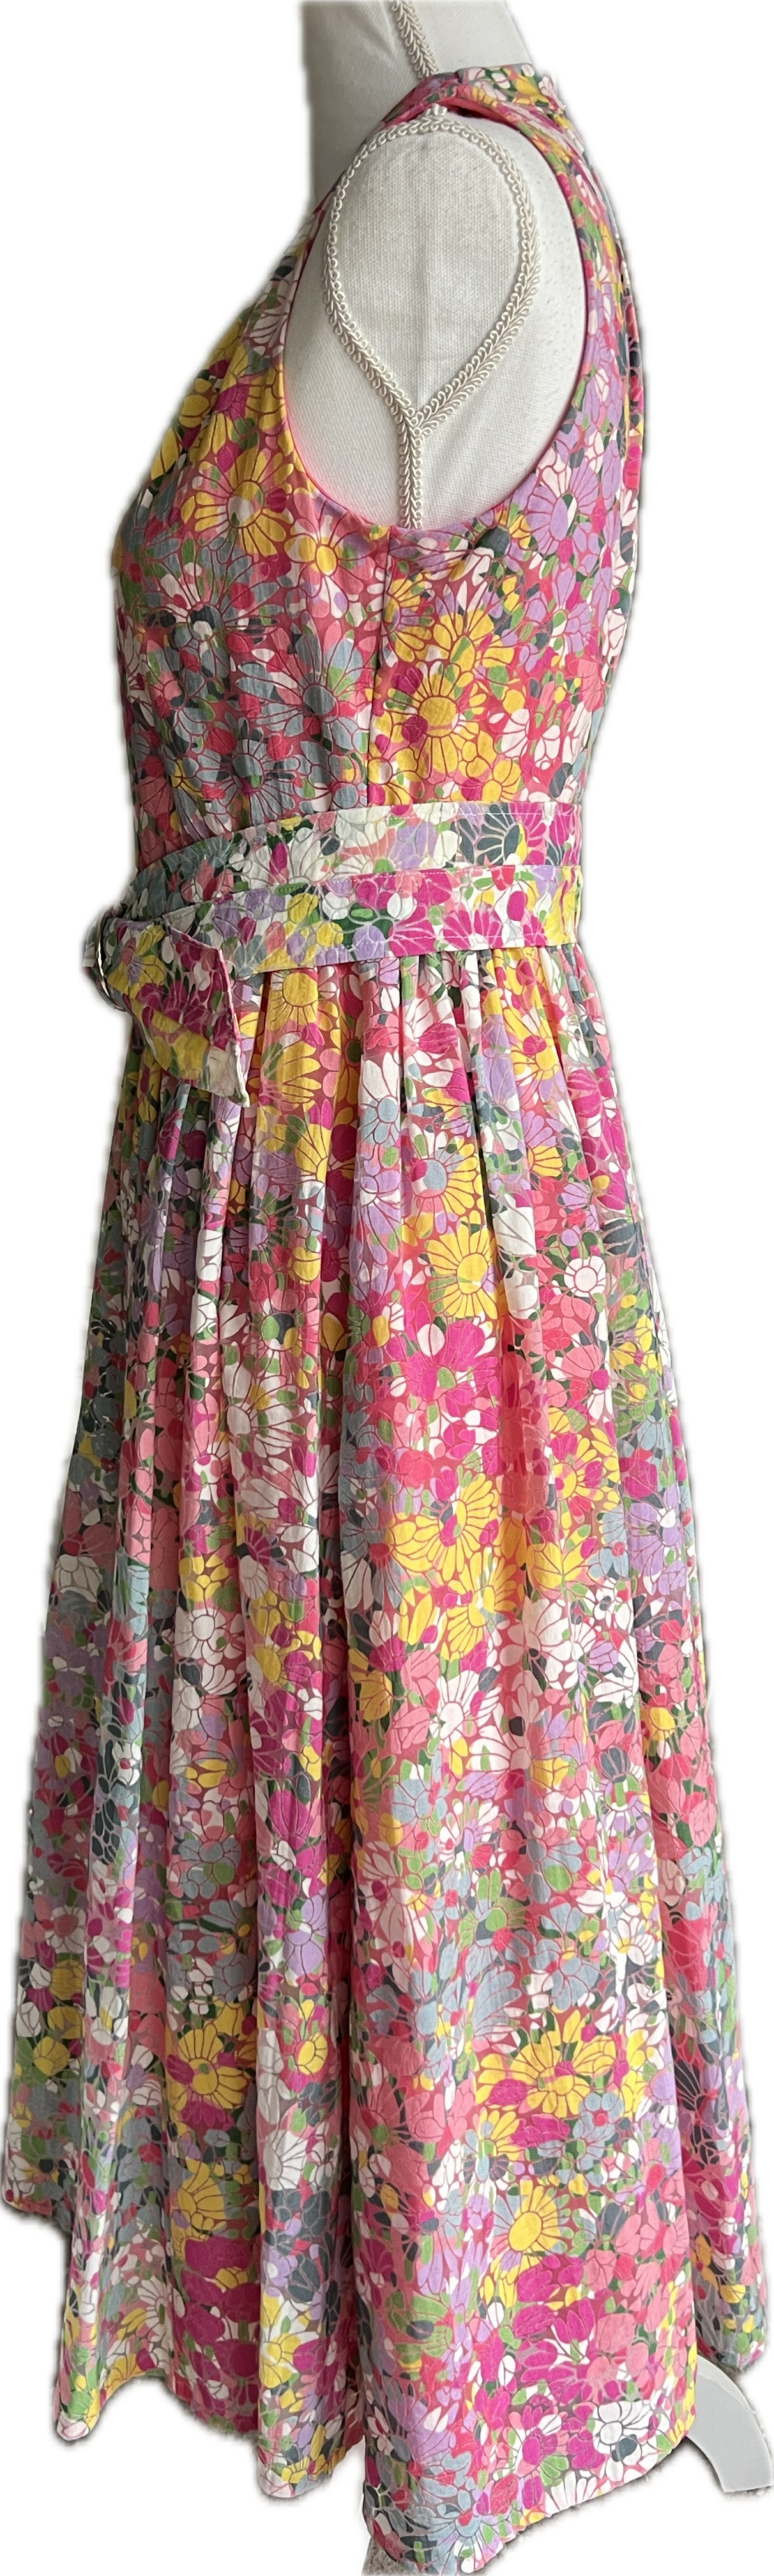 Kate Spade Floral Dots Burnout Dress, 4